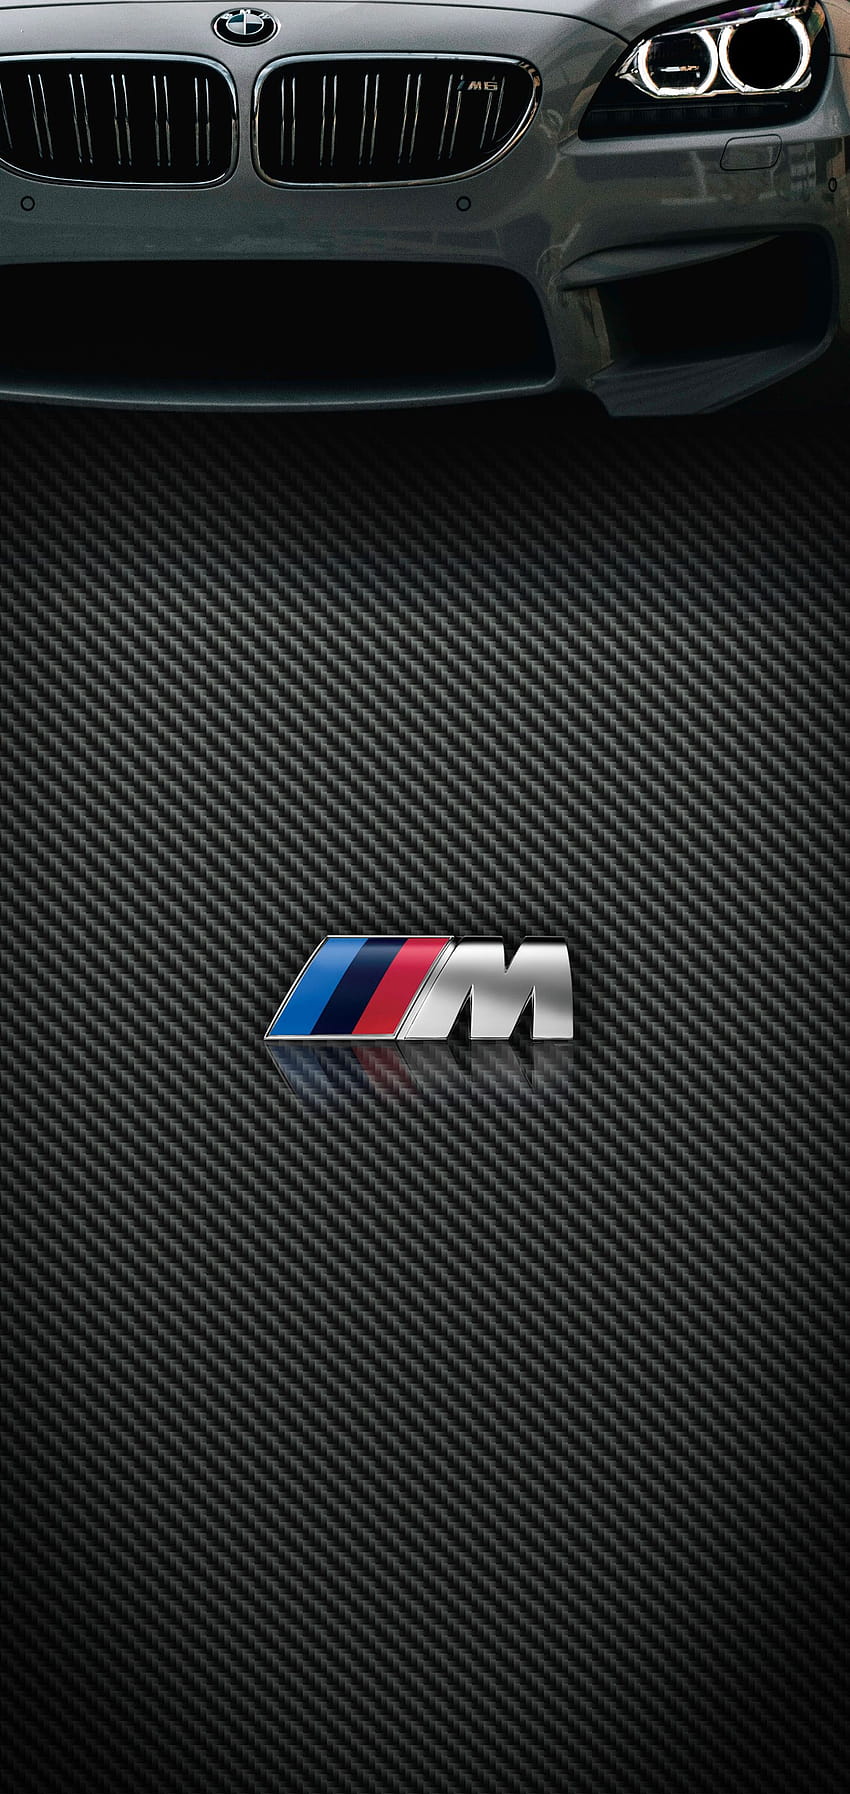 BMW M Power de OwThatHertz Galaxy S10 Hole, bmw m logo android fondo de pantalla del teléfono